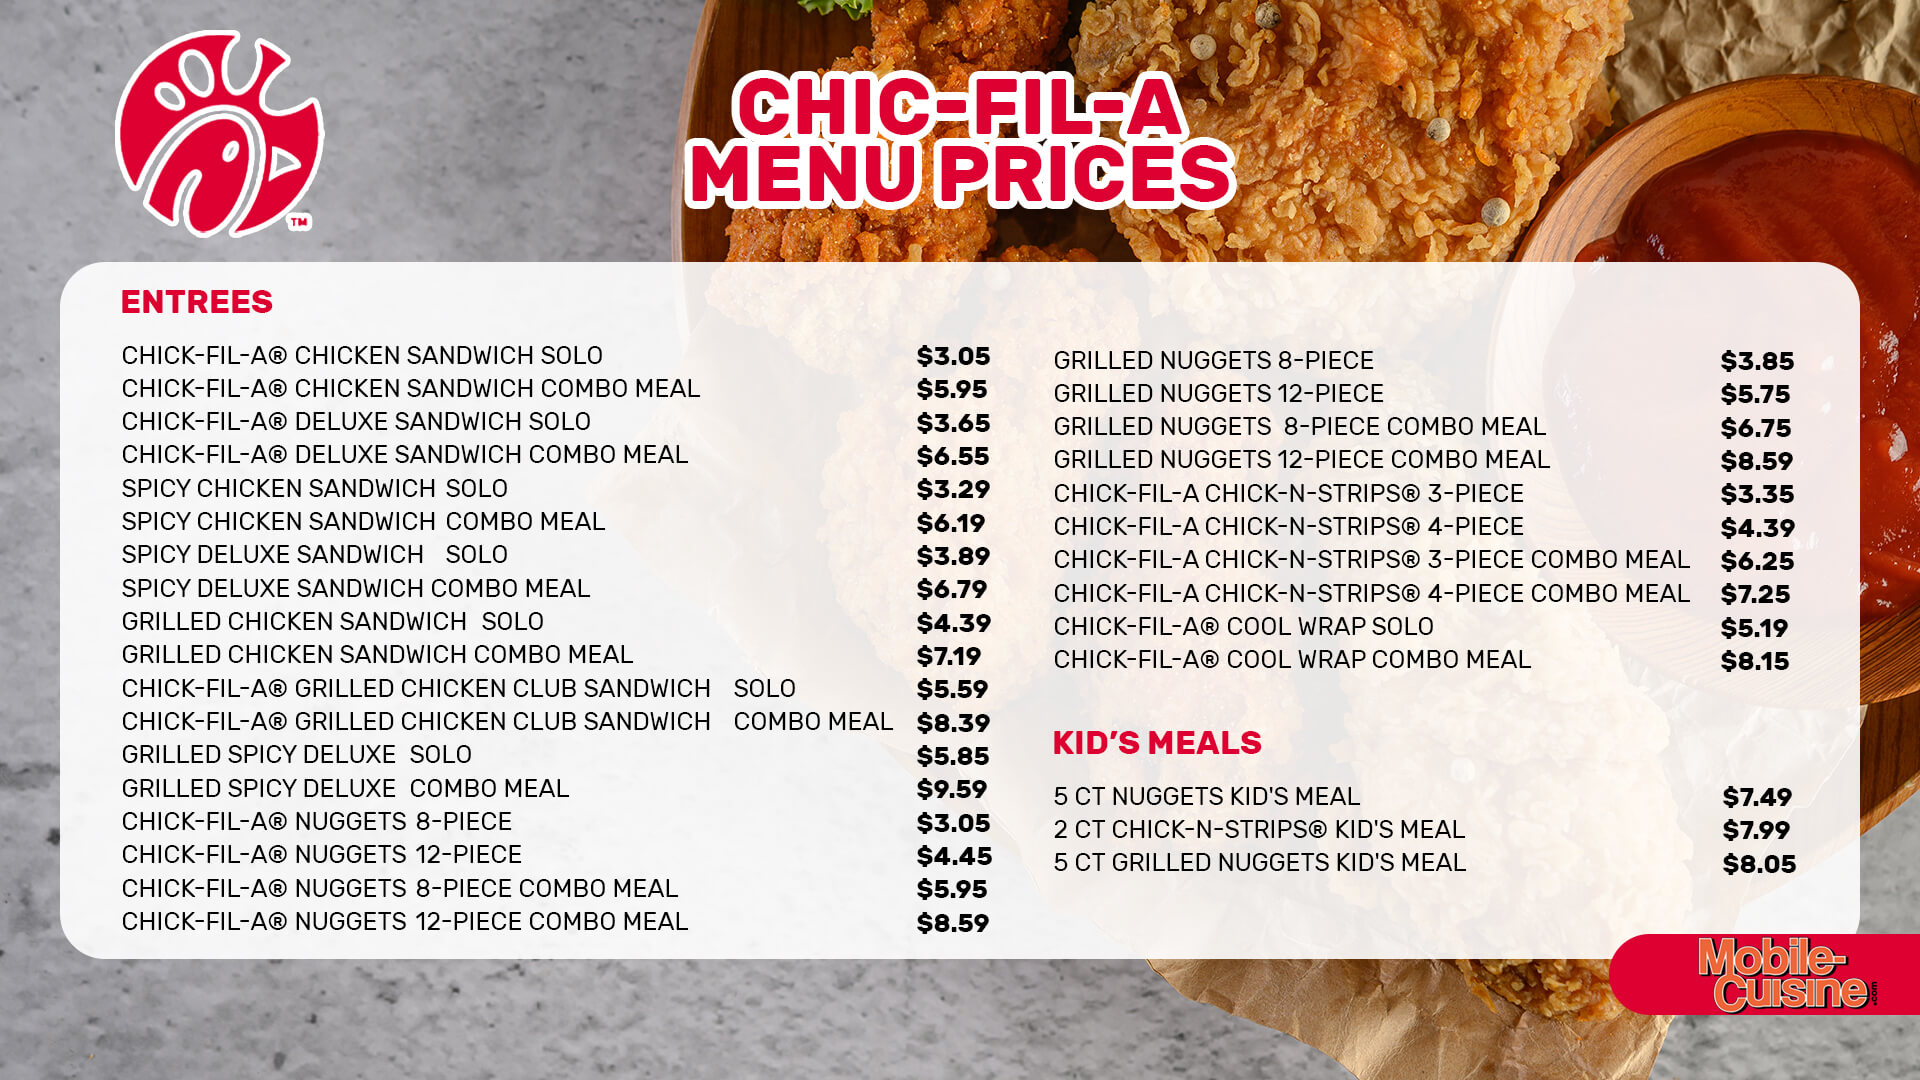 Chic-fil-A menu prices